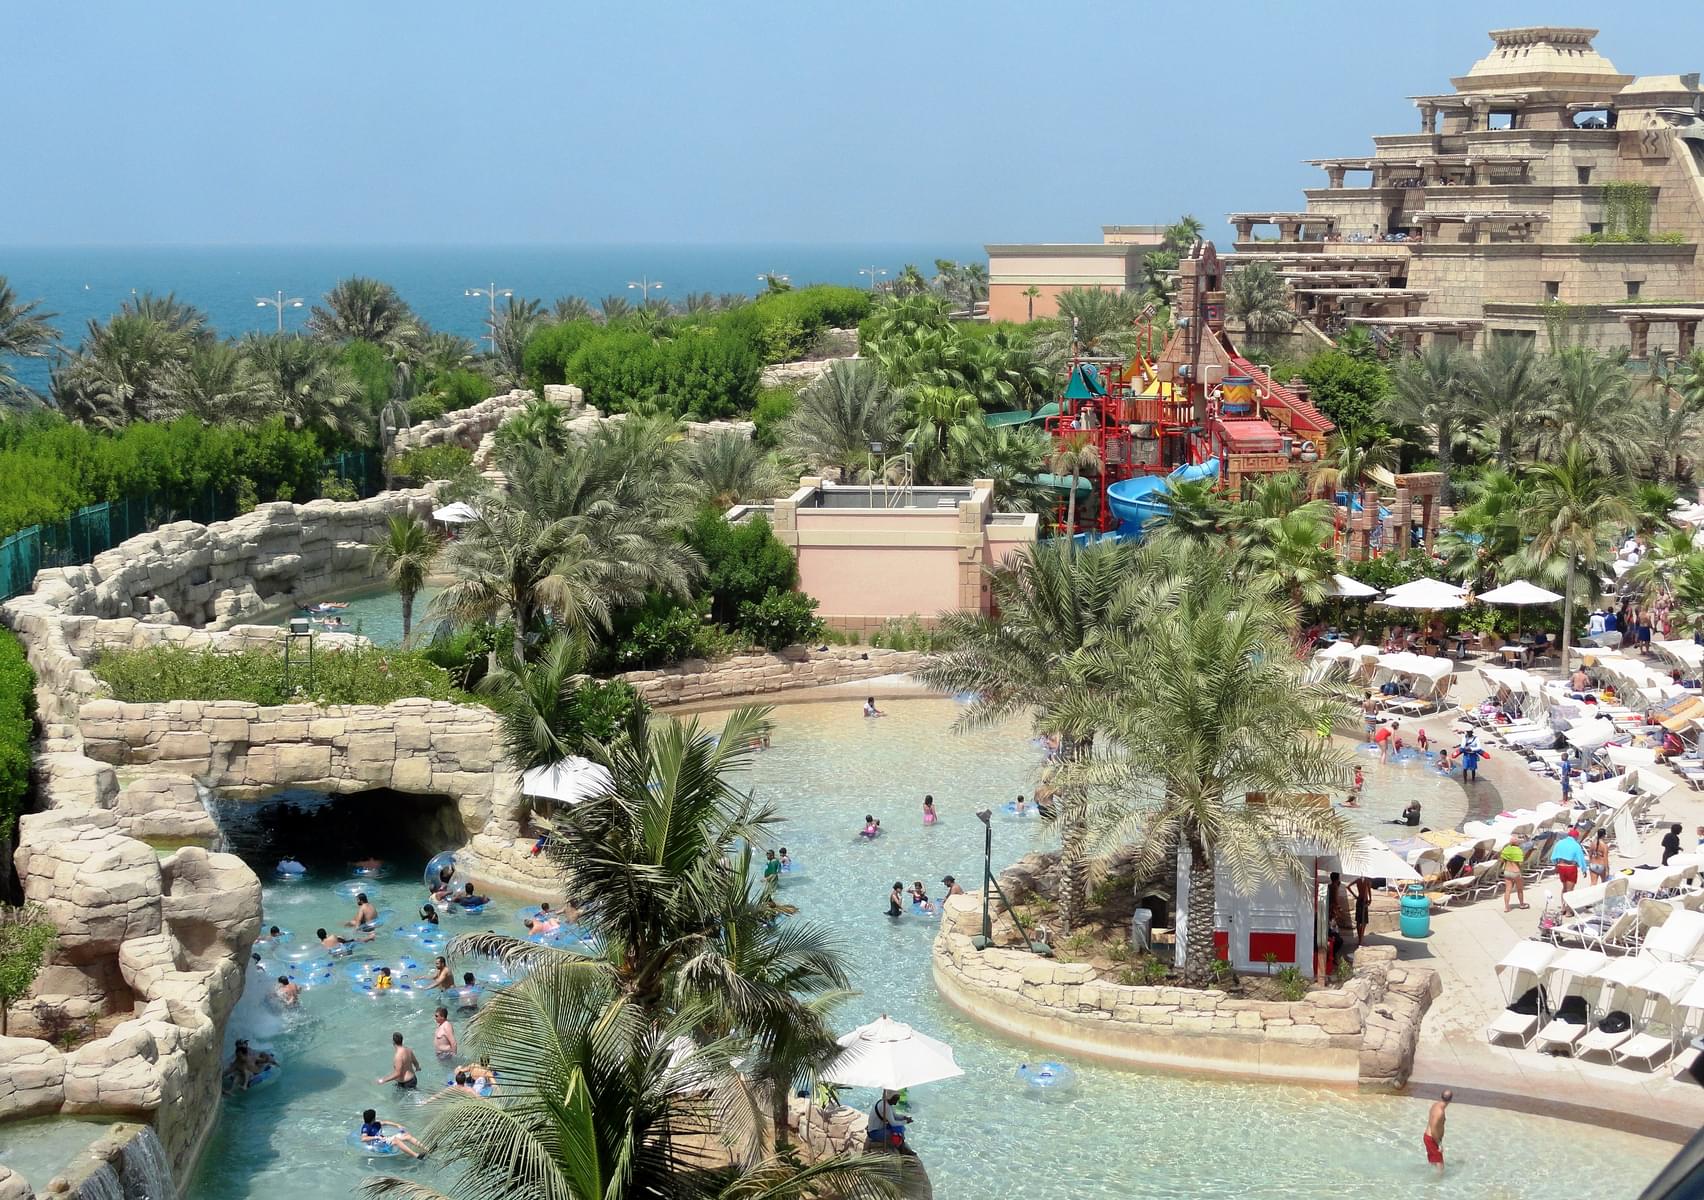 Visit Atlantis Aquaventure Waterpark in Dubai